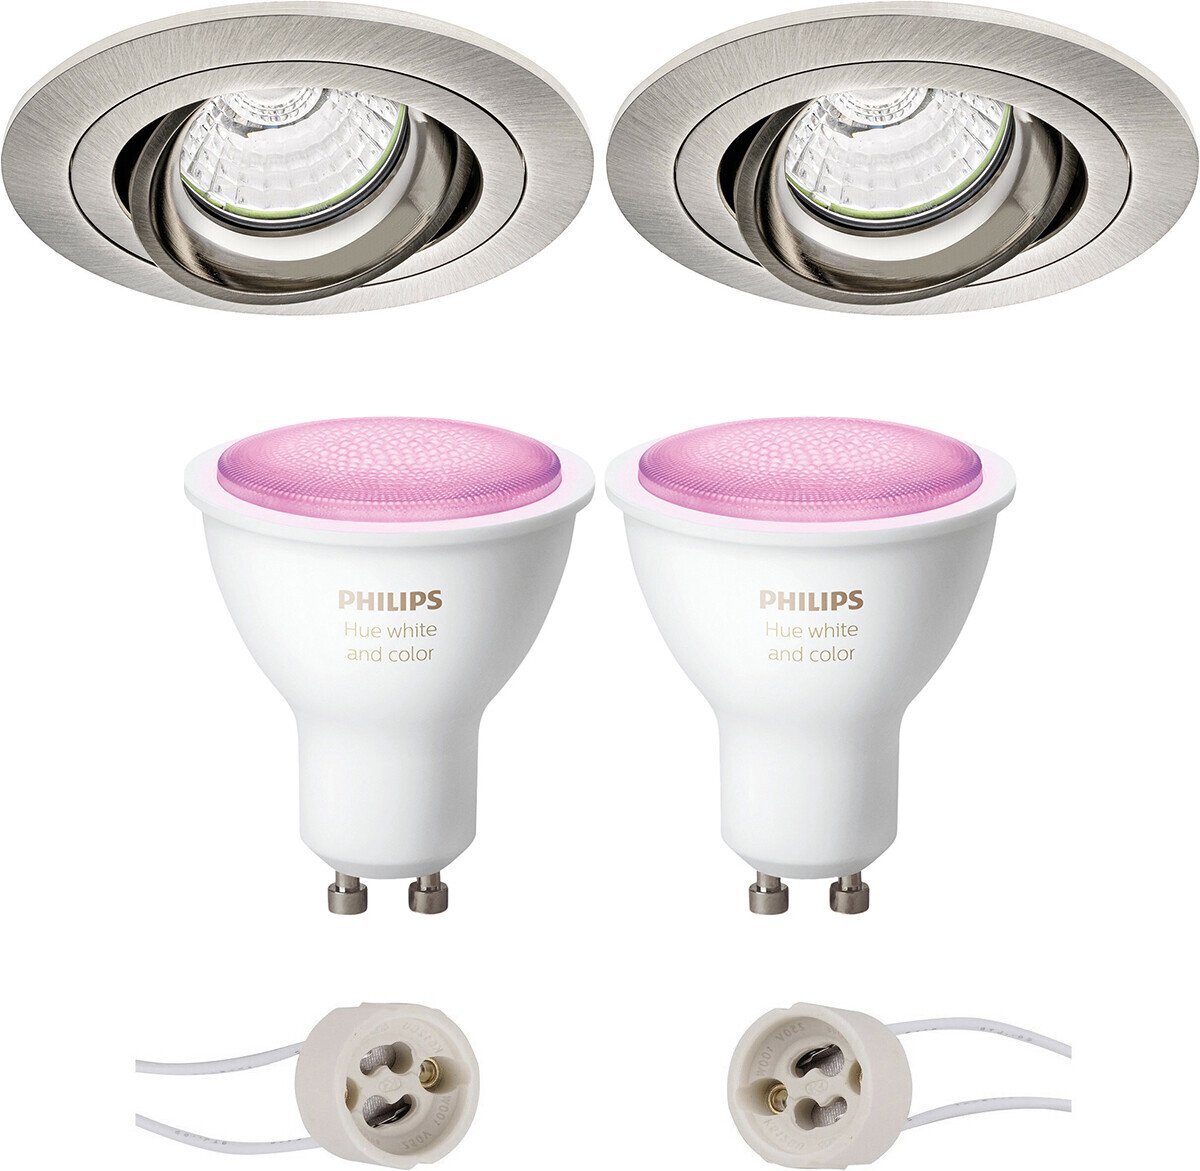 Qualu Proma Alpin Pro - Inbouw Rond - Mat Nikkel - Kantelbaar - Ø92mm - Philips Hue - LED Spot Set GU10 - White and Color Ambiance - Bluetooth